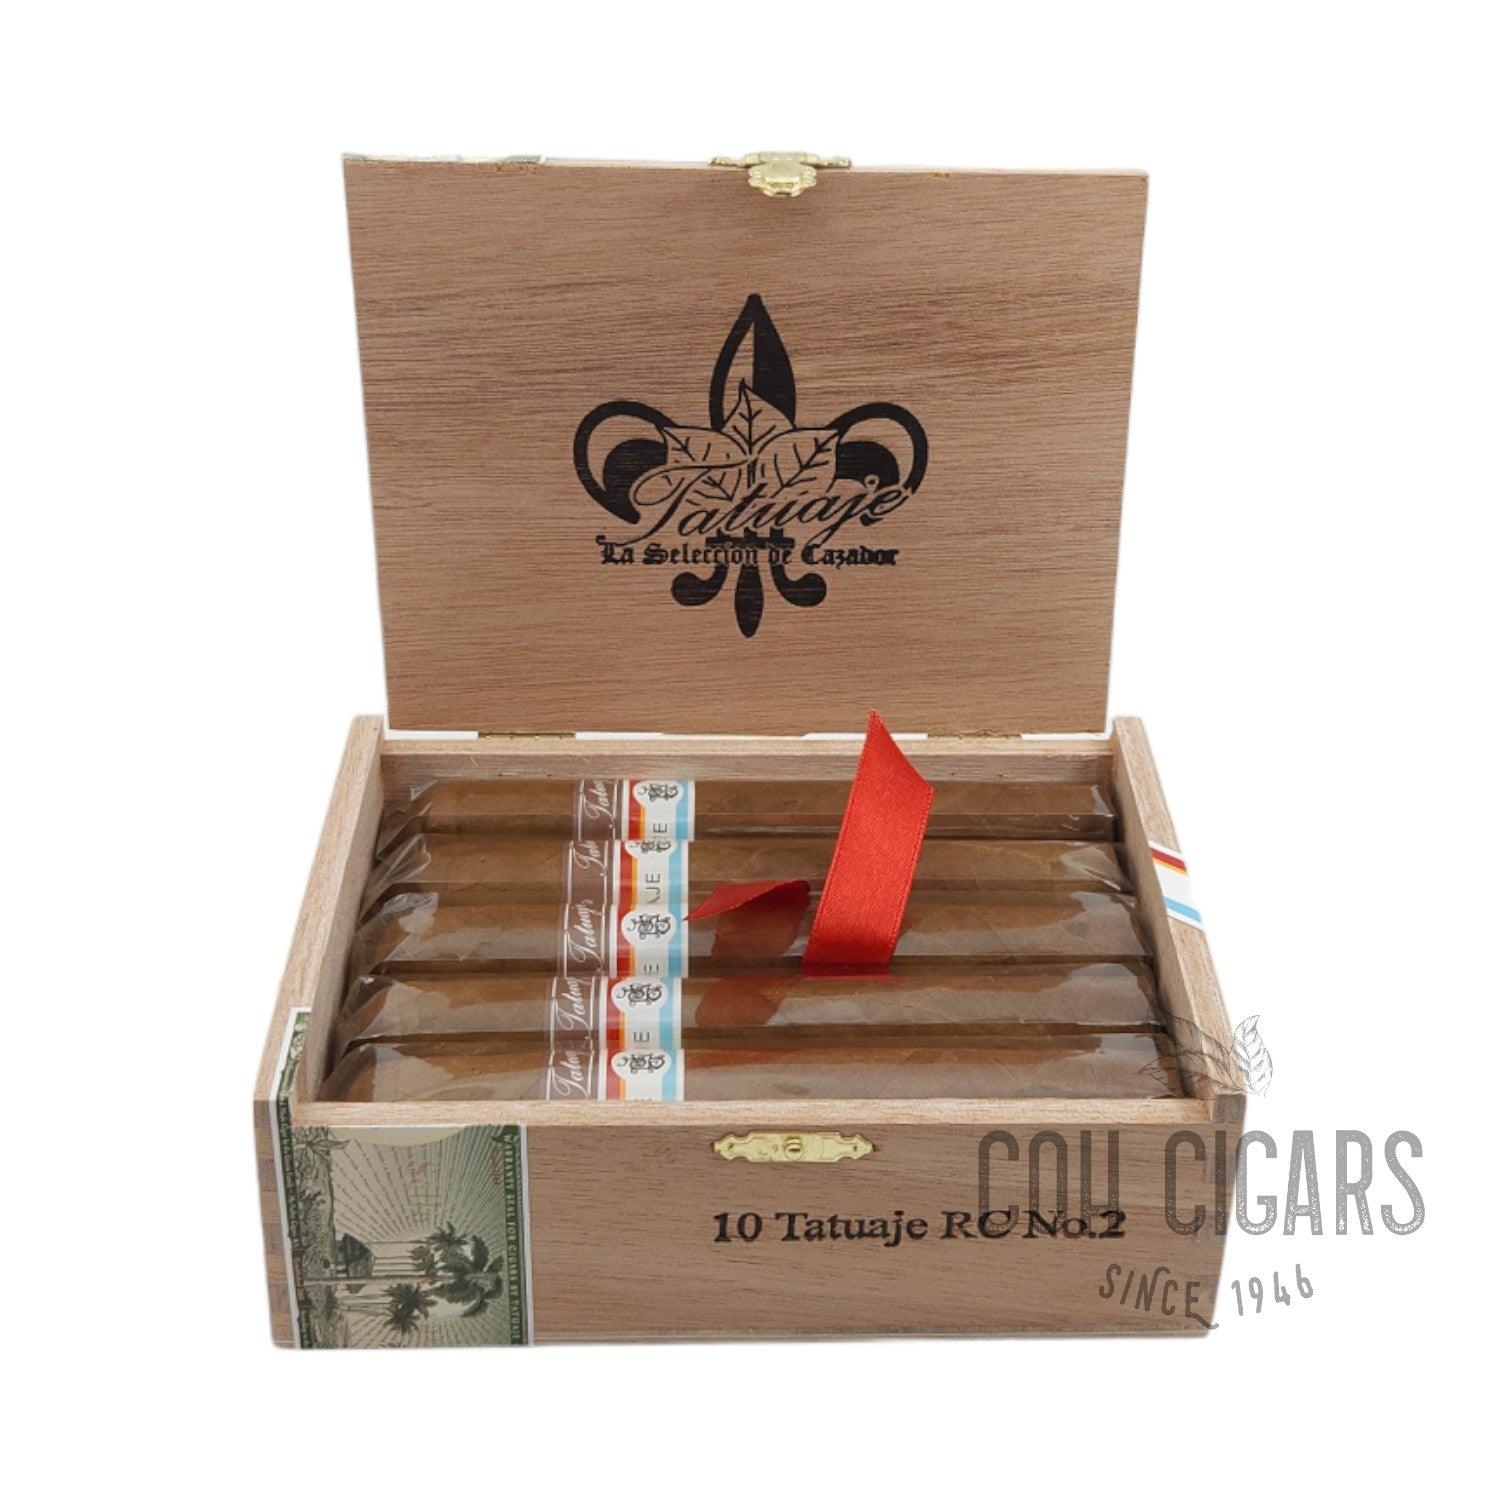 Tatuaje Cigar | La Seleccion De Cazabor RC No.2 | Box 10 - HK CohCigars